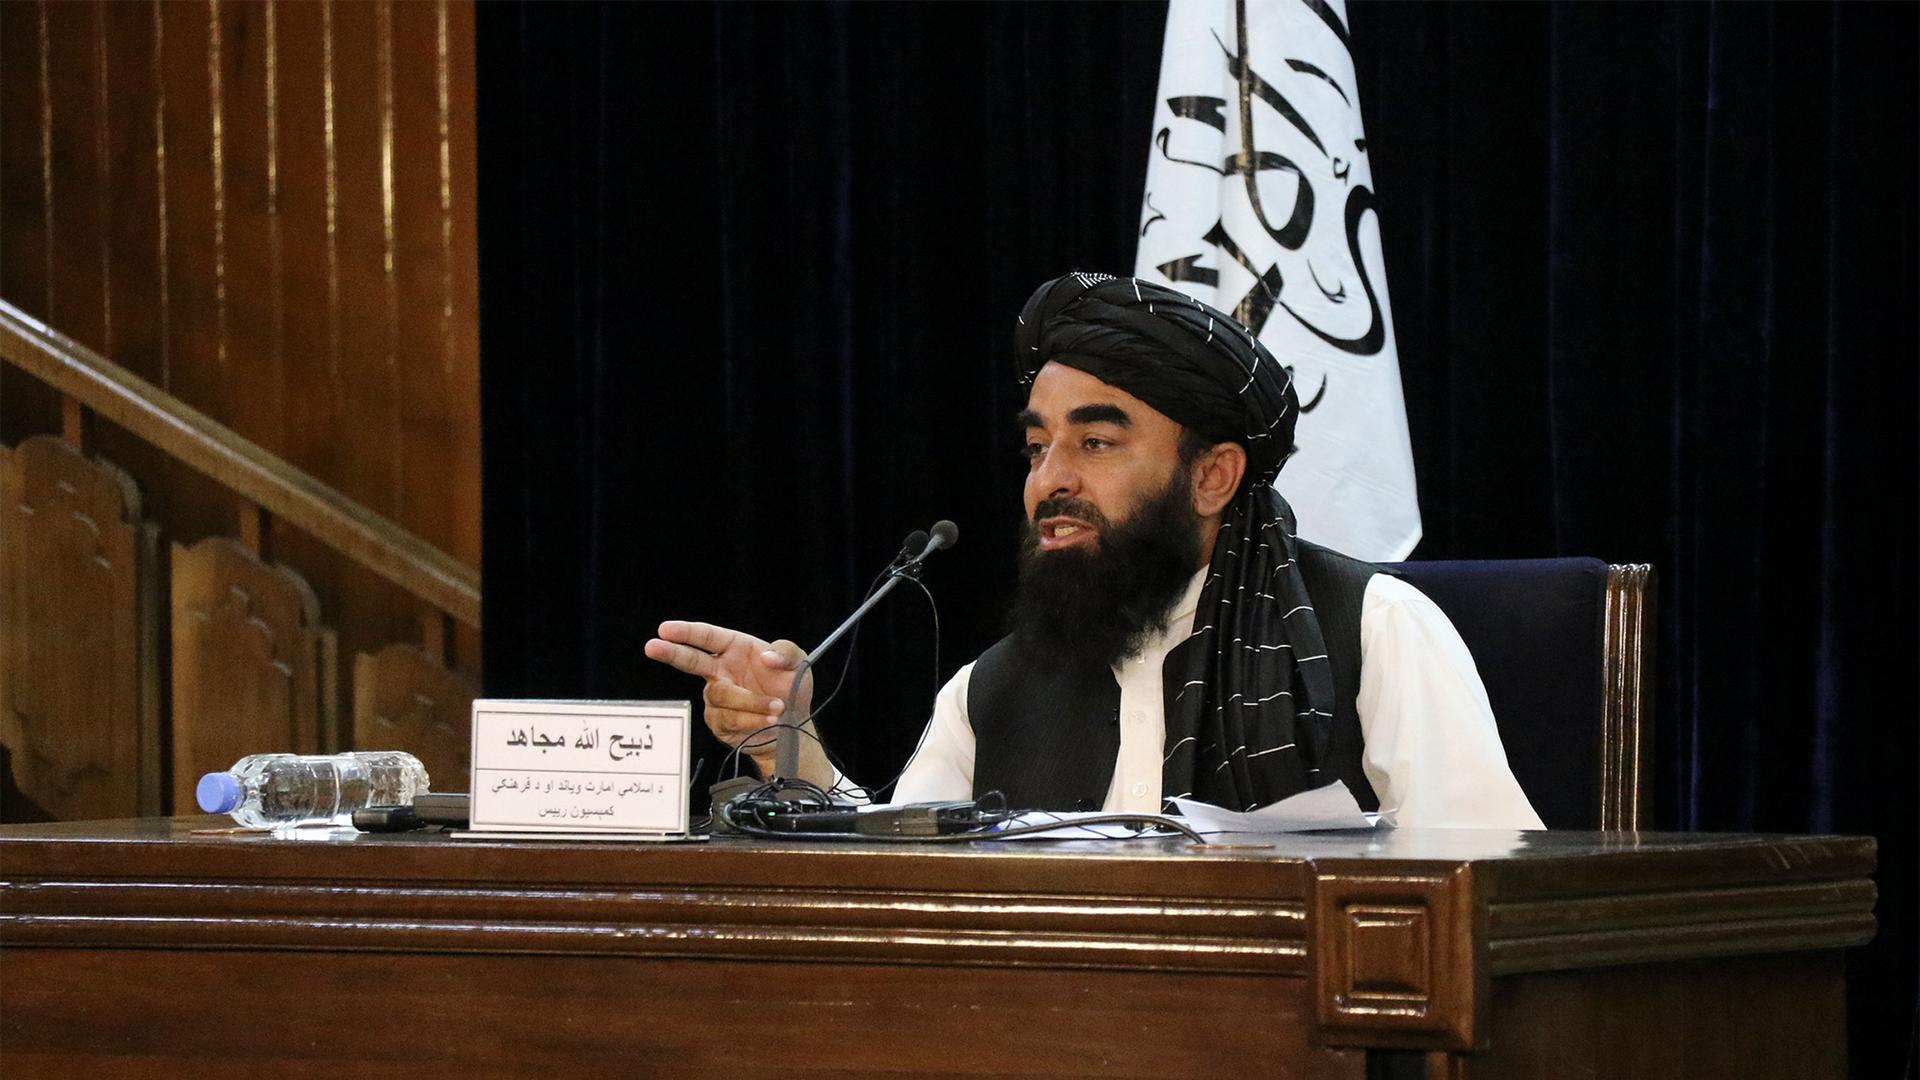 Taliban spokesman Zabihullah Mujahid speaks during a press conference in Kabul, Afghanistan